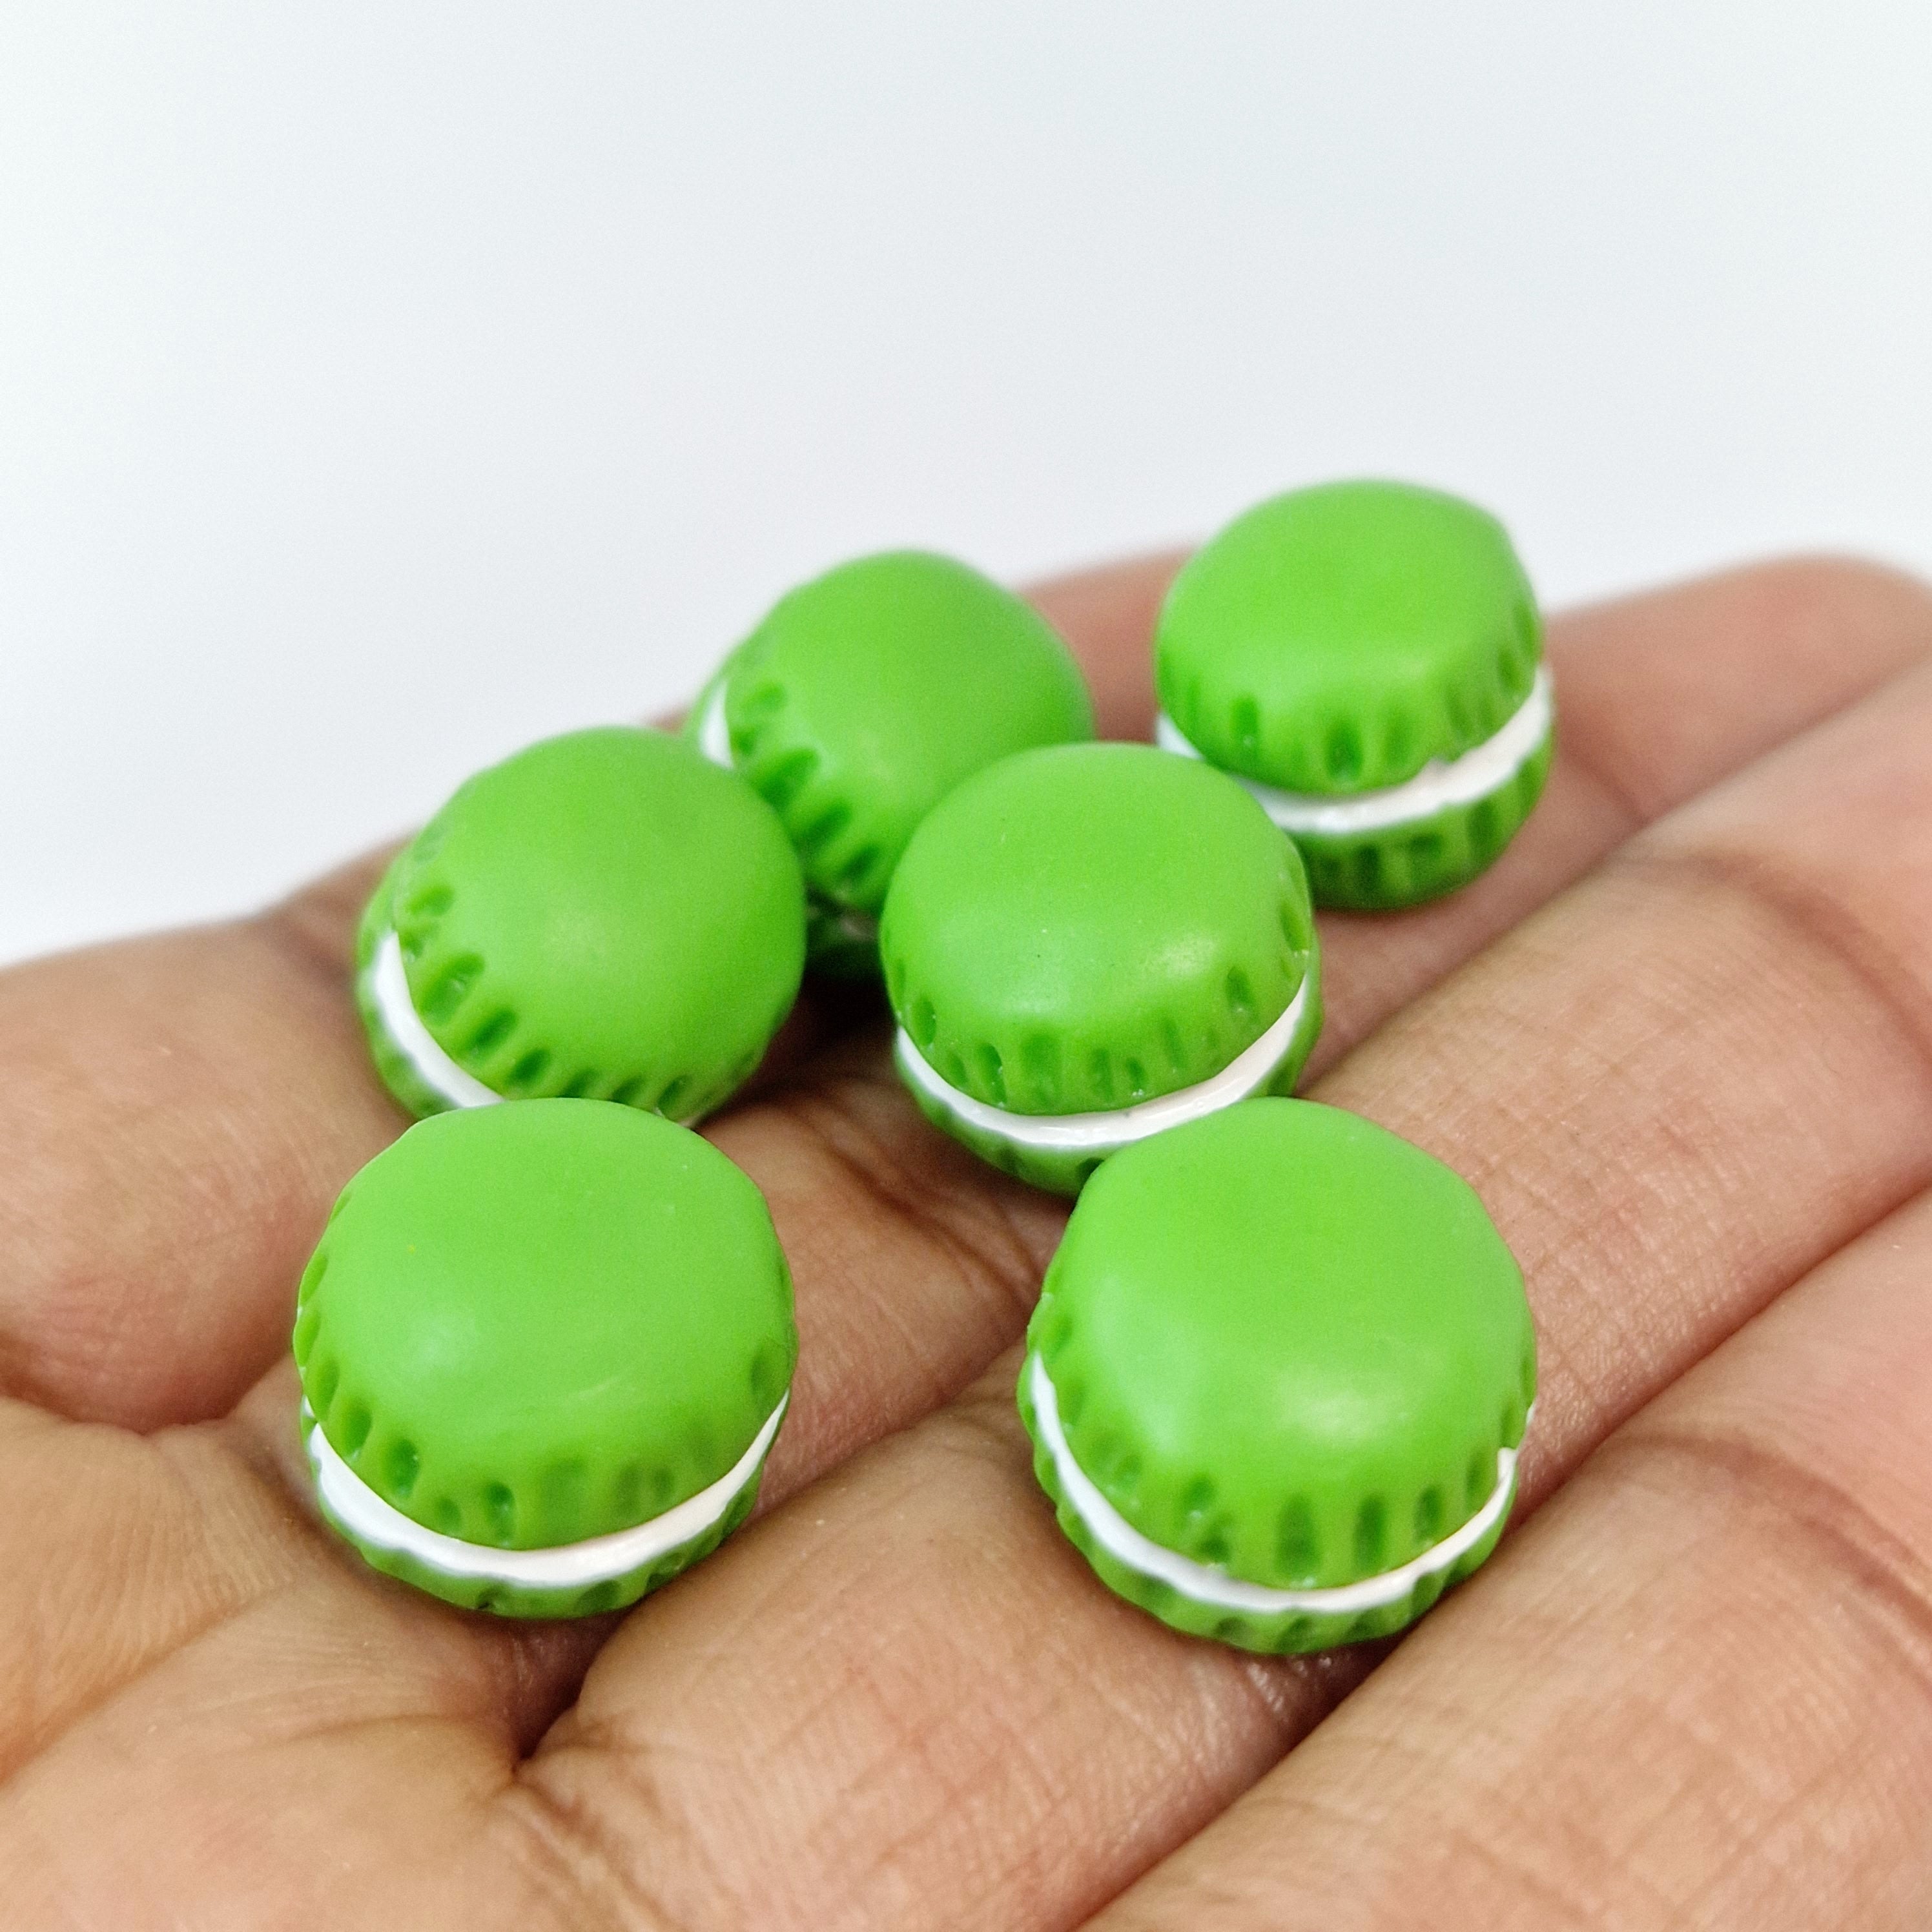 MajorCrafts 6pcs 13mm Green Flat Back Miniature Cookies and Cream Kawaii Cabochons